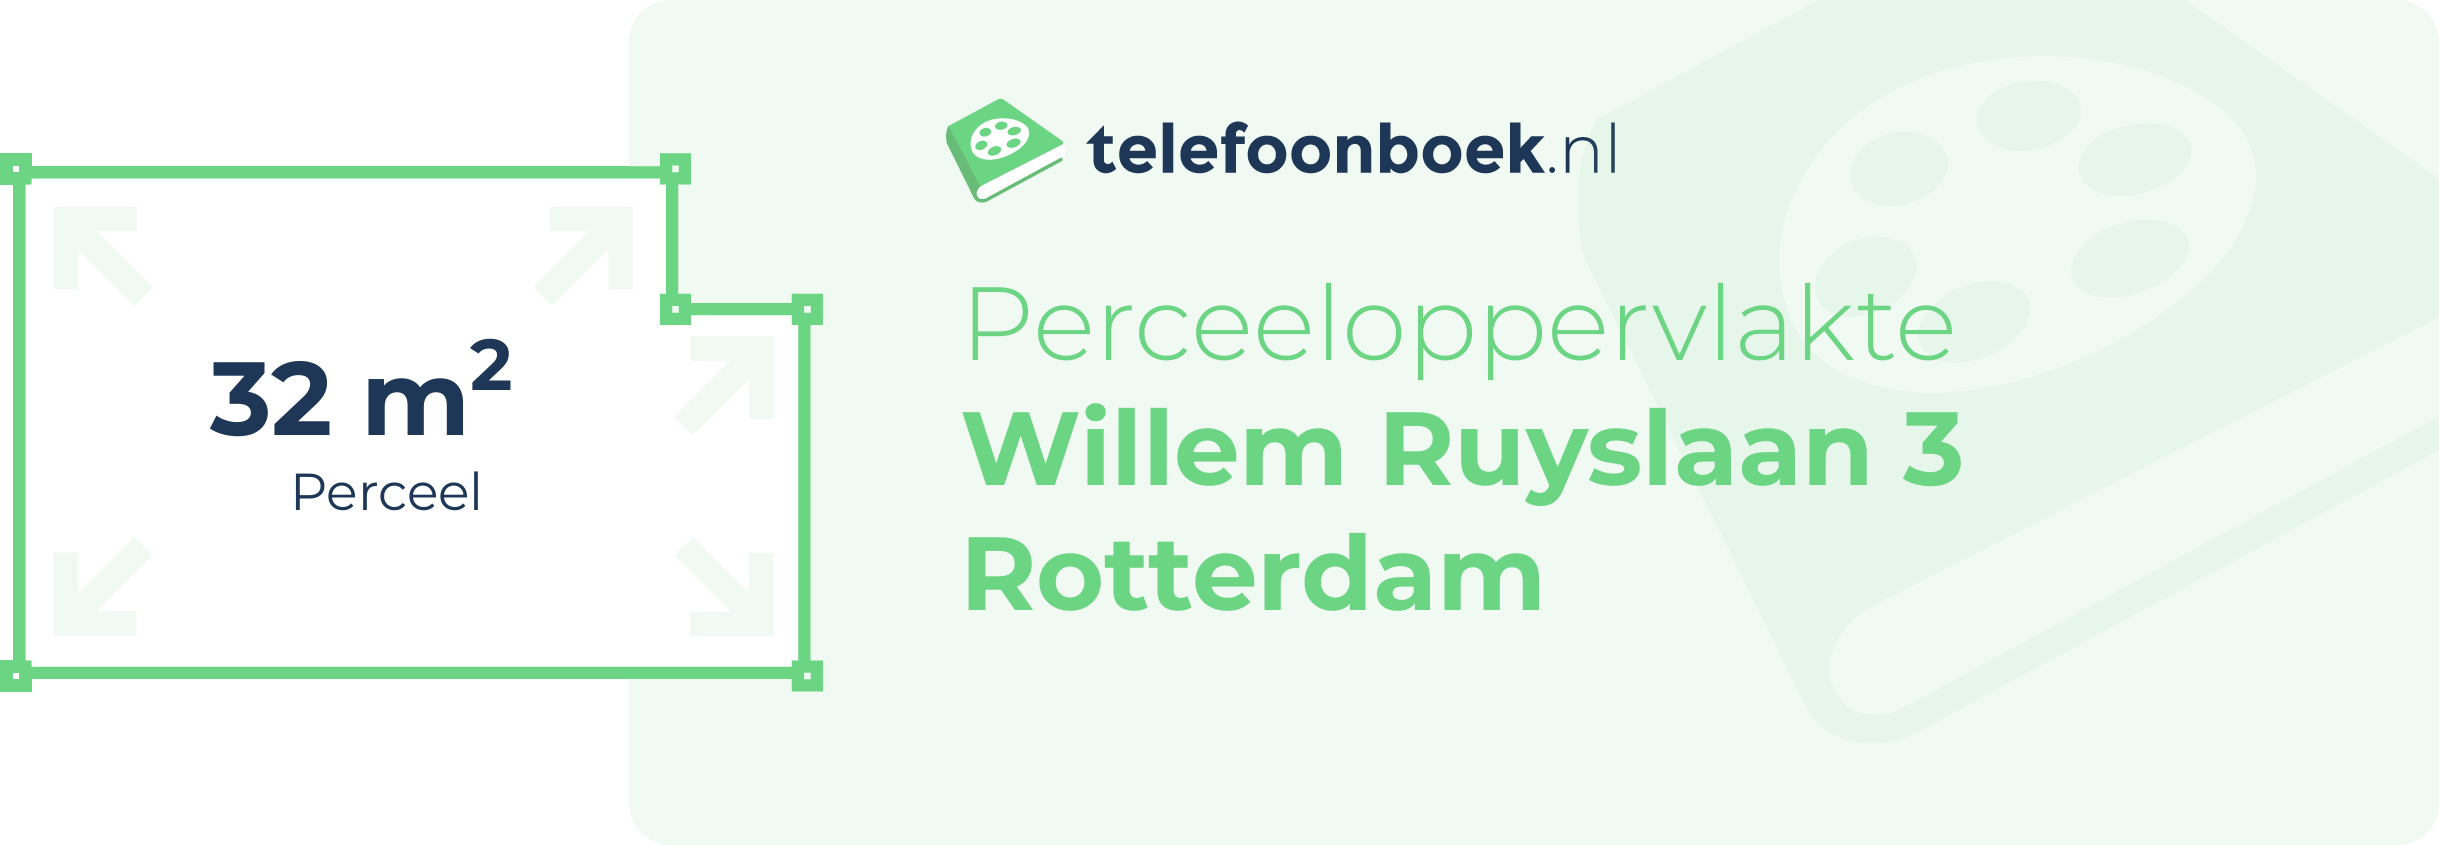 Perceeloppervlakte Willem Ruyslaan 3 Rotterdam